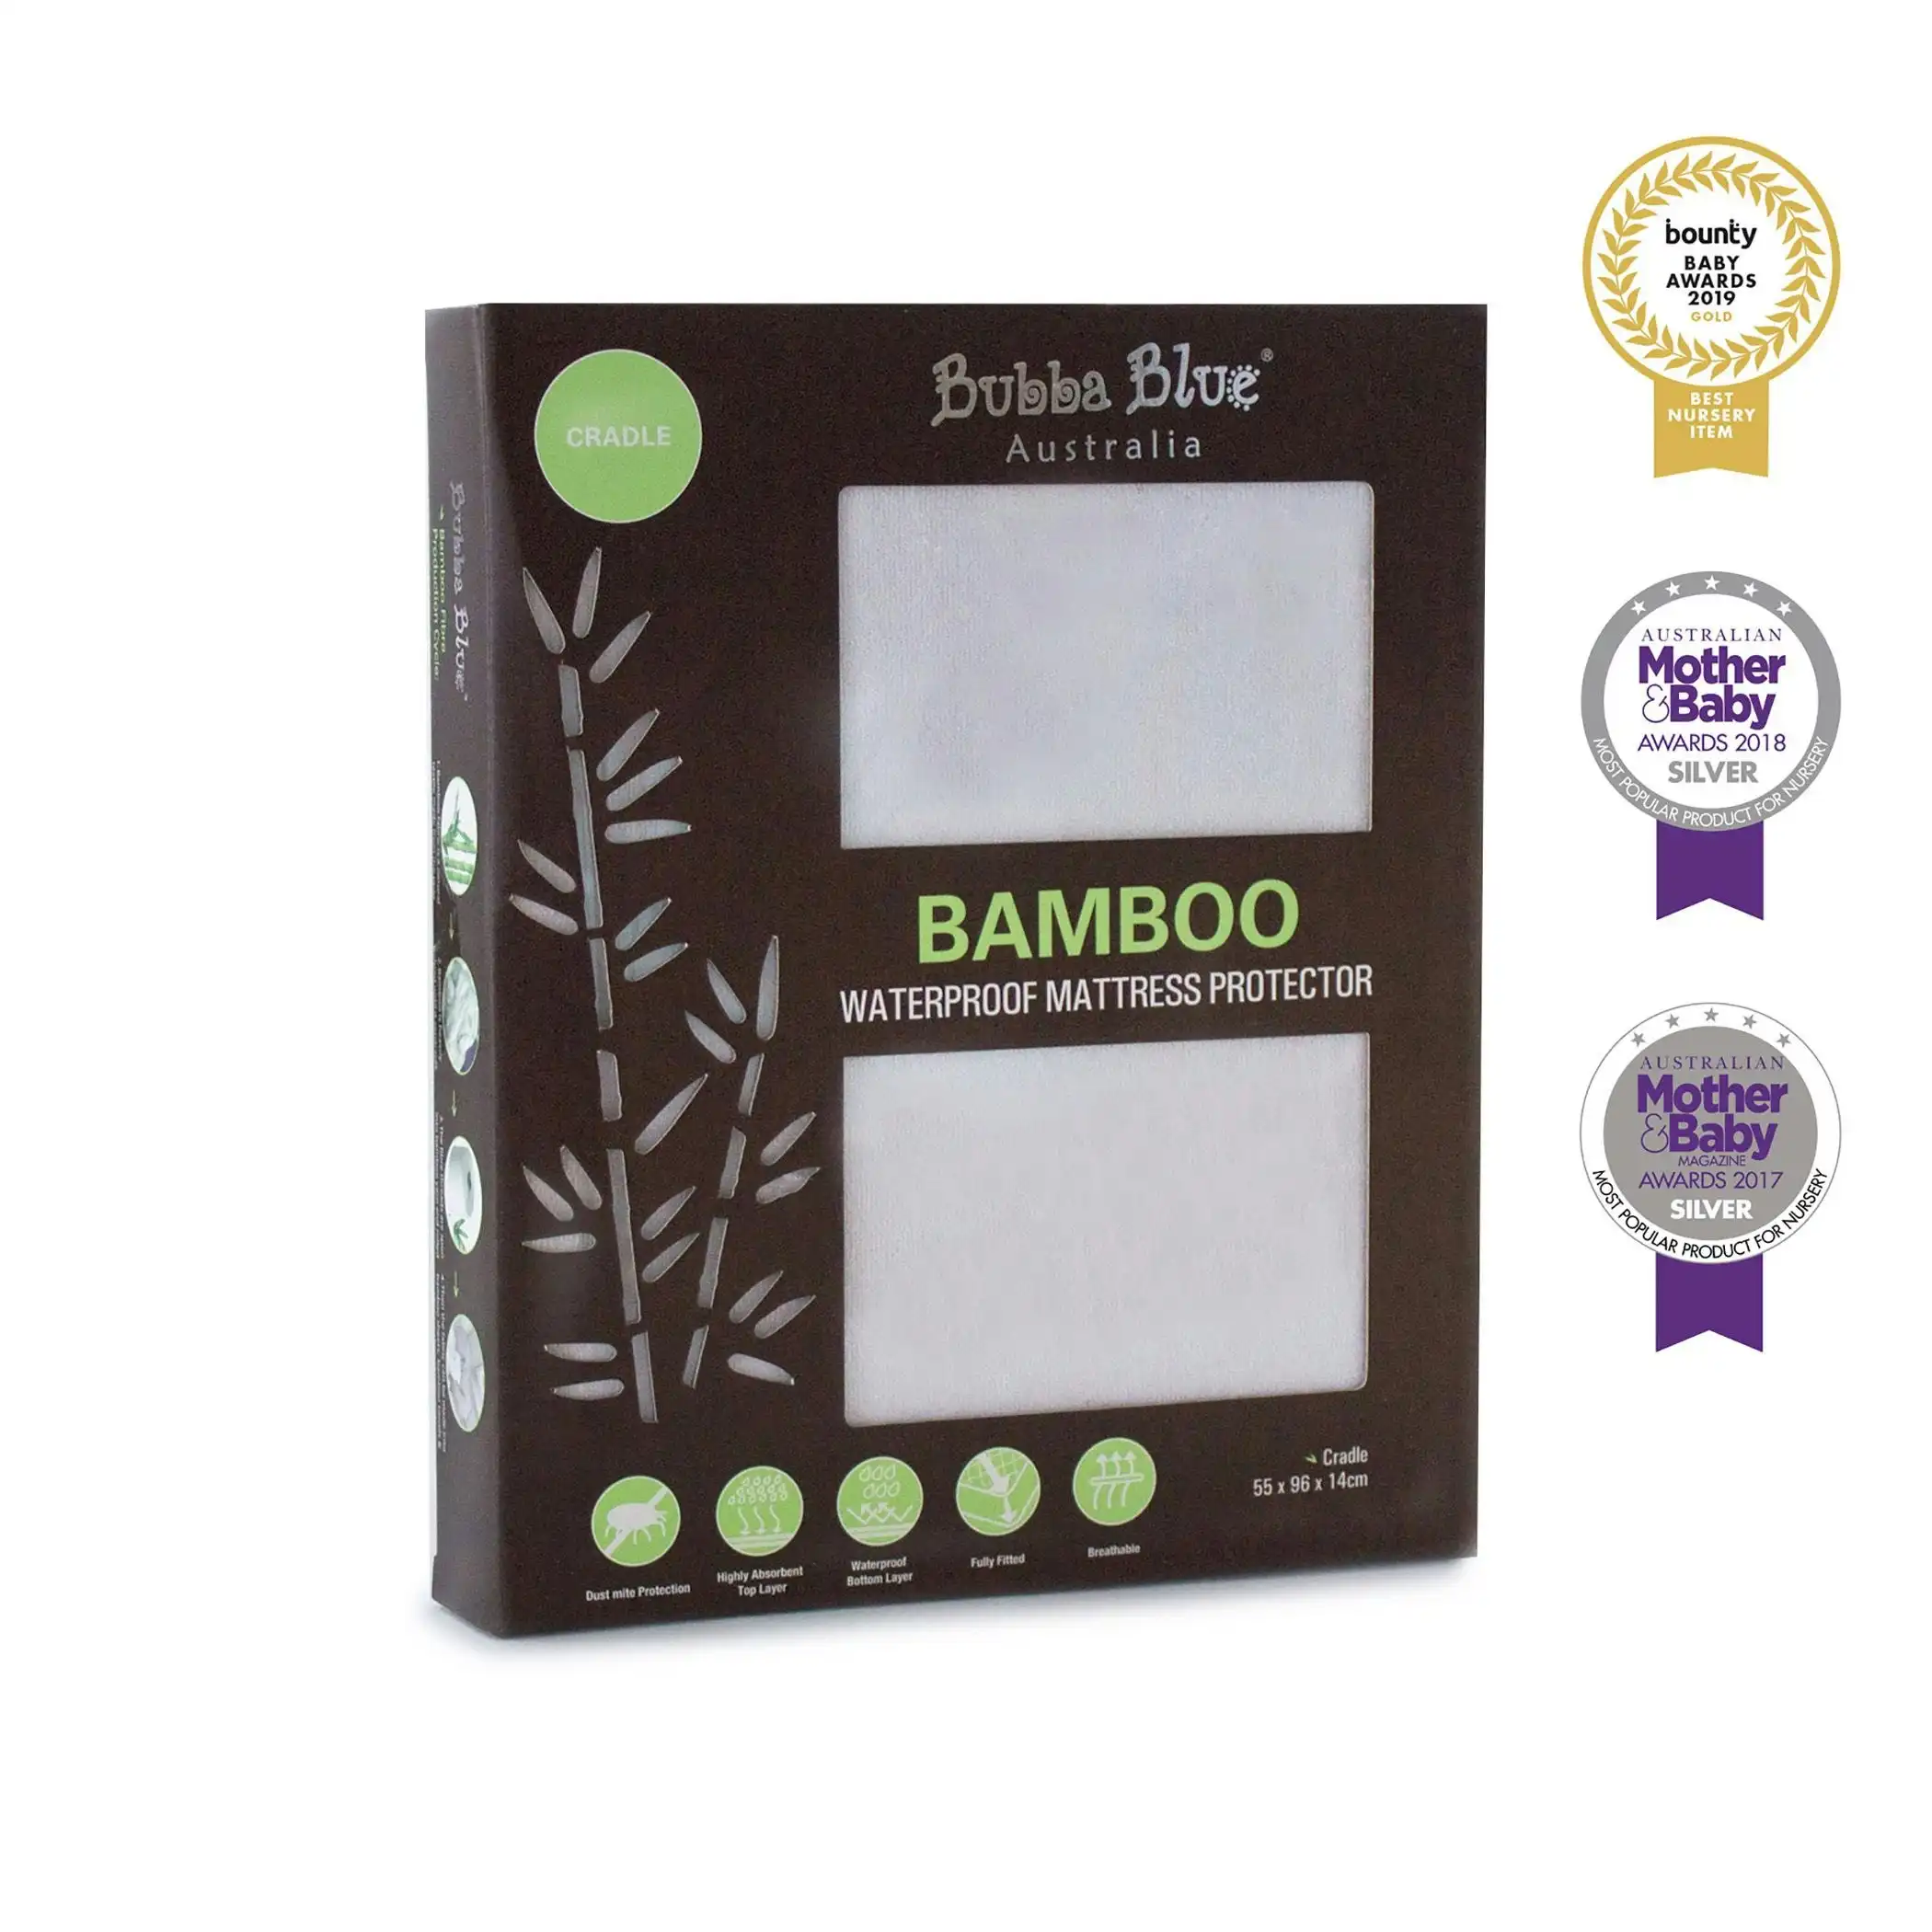 Bubba Blue Bamboo Mattress Protector Cradle